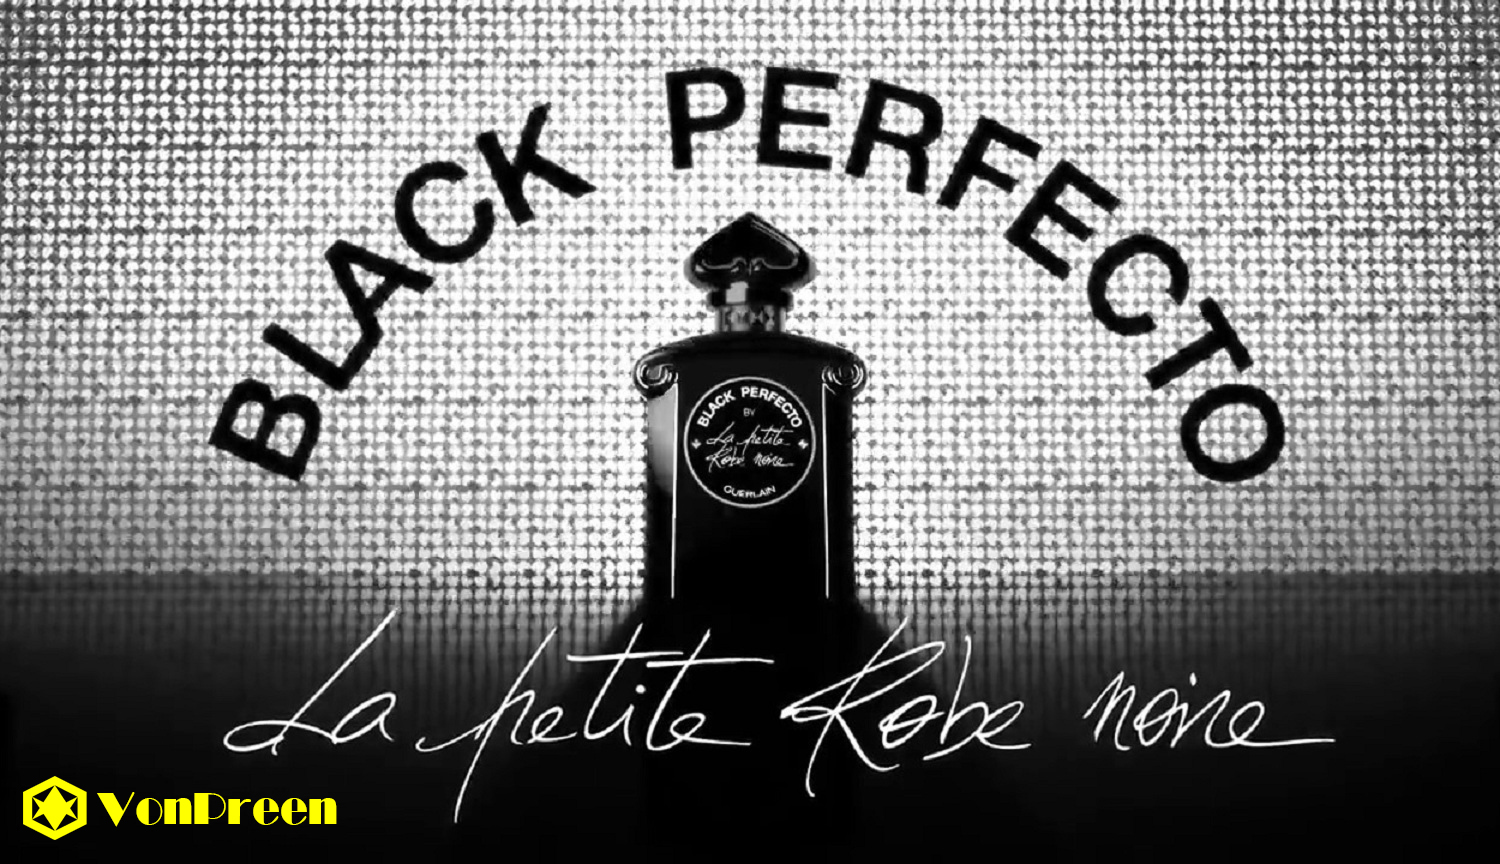 Nước hoa Guerlain La Petite Robe Noire Black Perfecto 50 ml, quyến rũ, gợi cảm, cá tính, hấp dẫn.